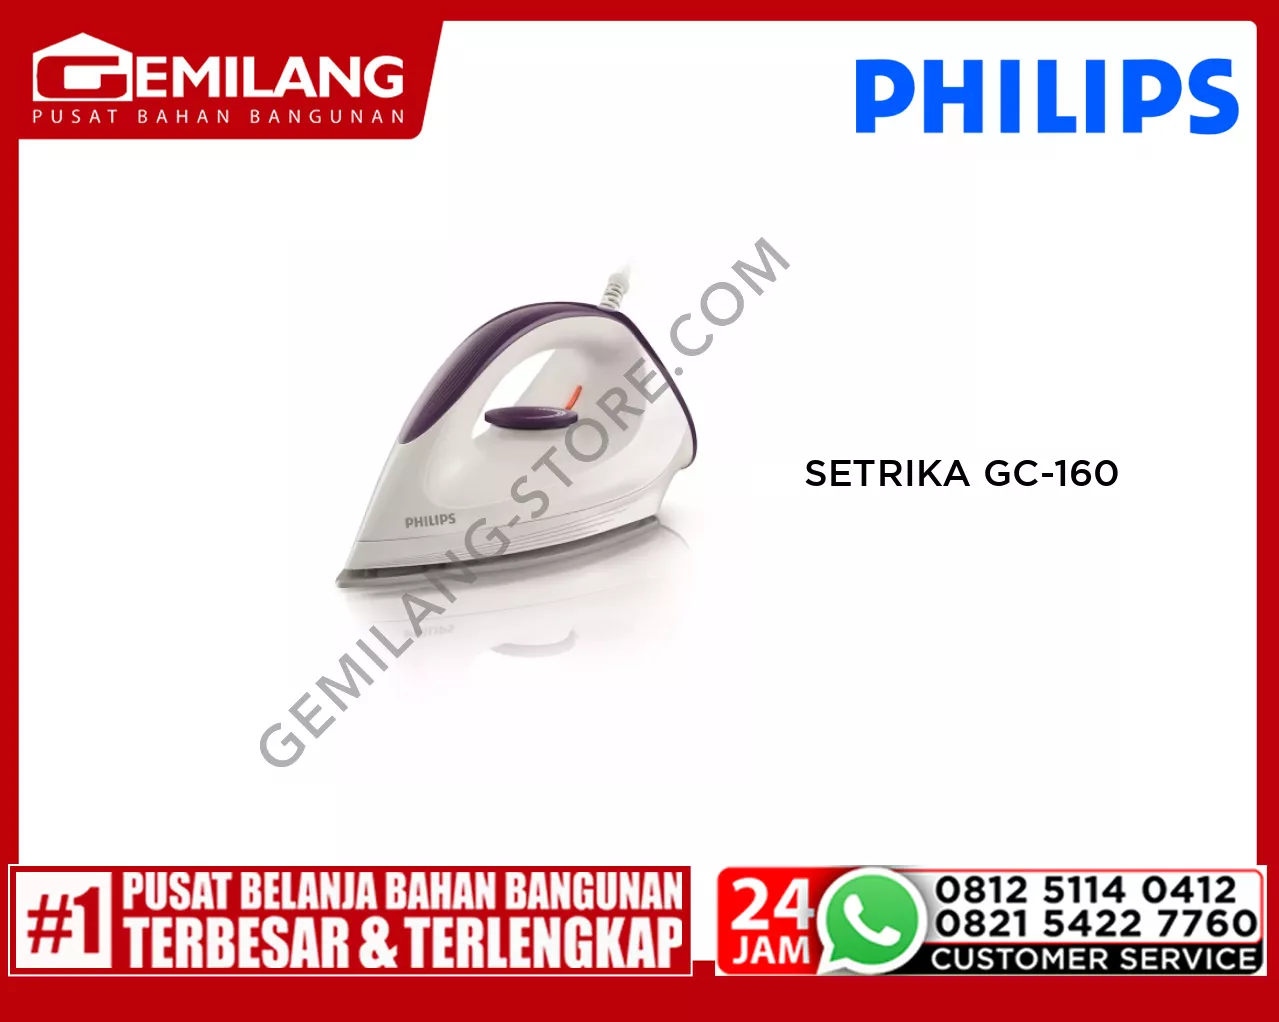 PHILIPS SETRIKA GC-160